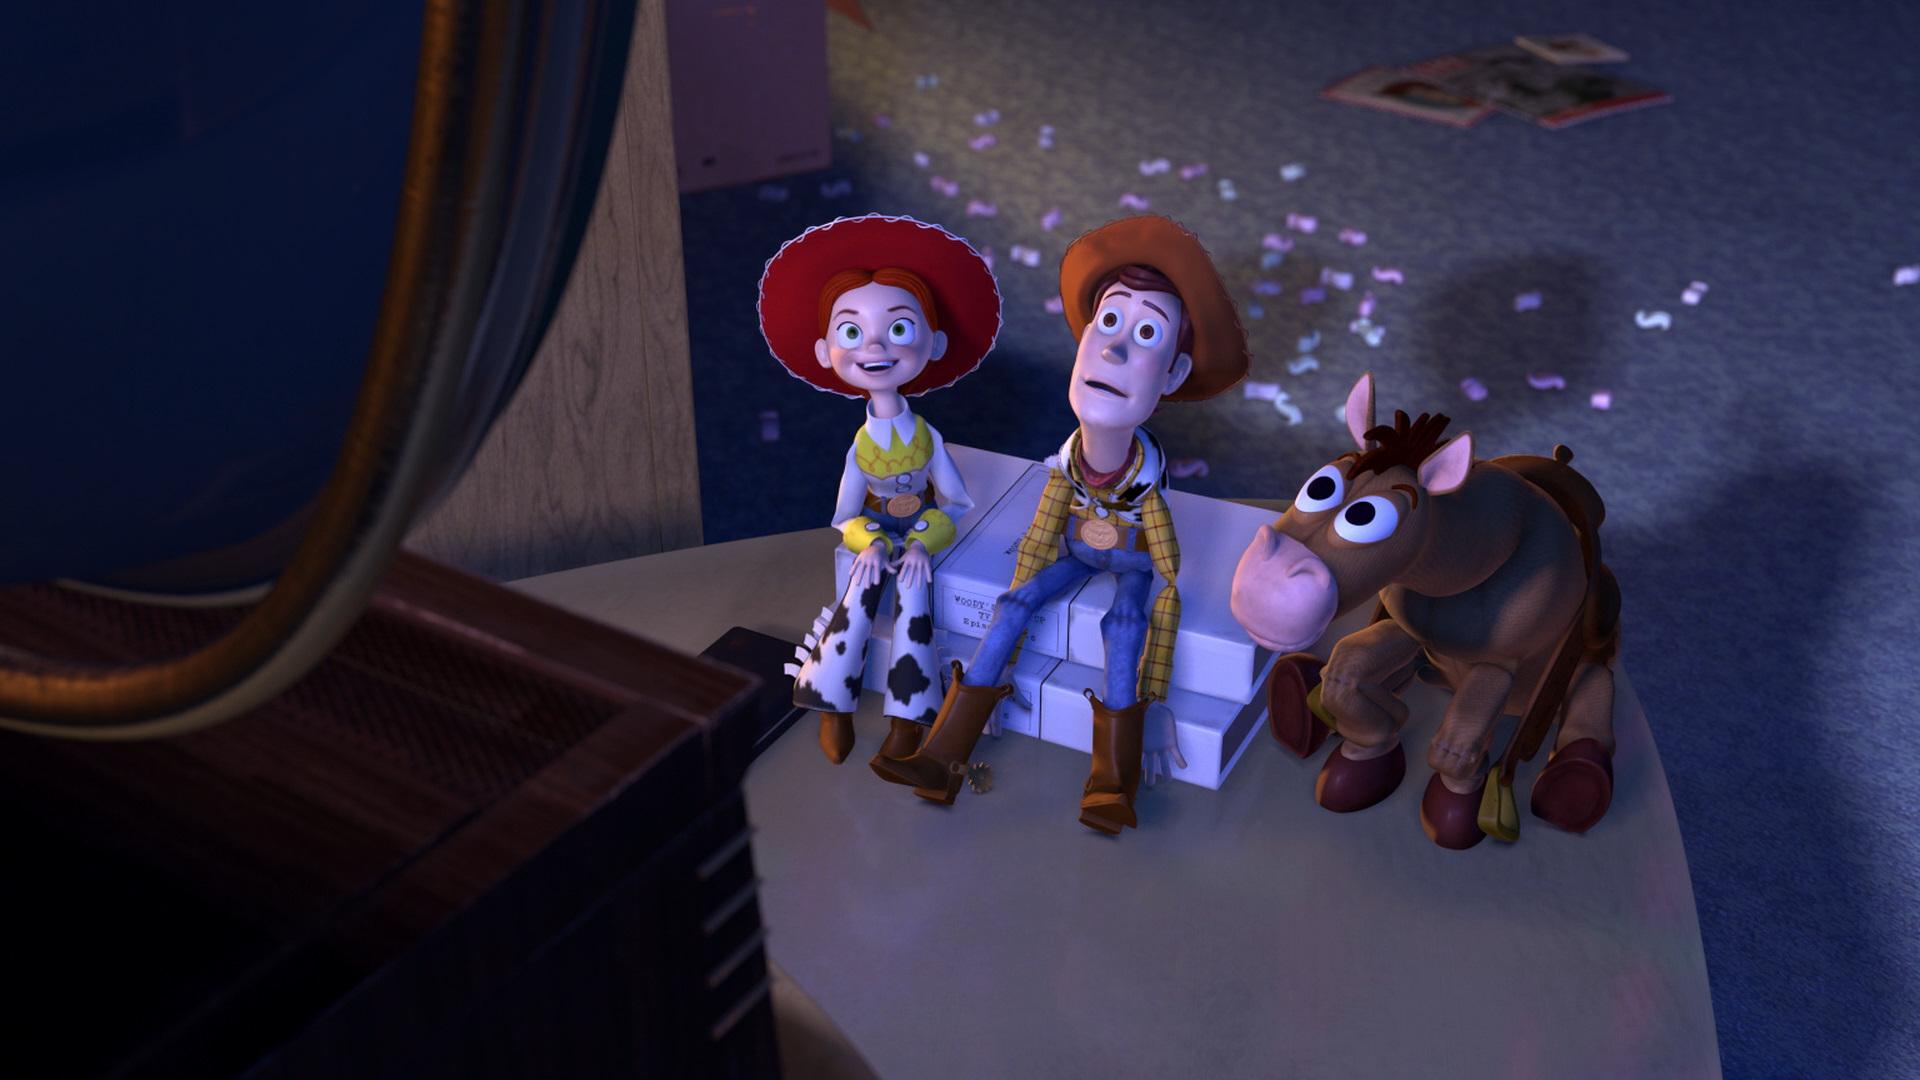 Toy Story 2 - Disney Image (25300939) - Fanpop